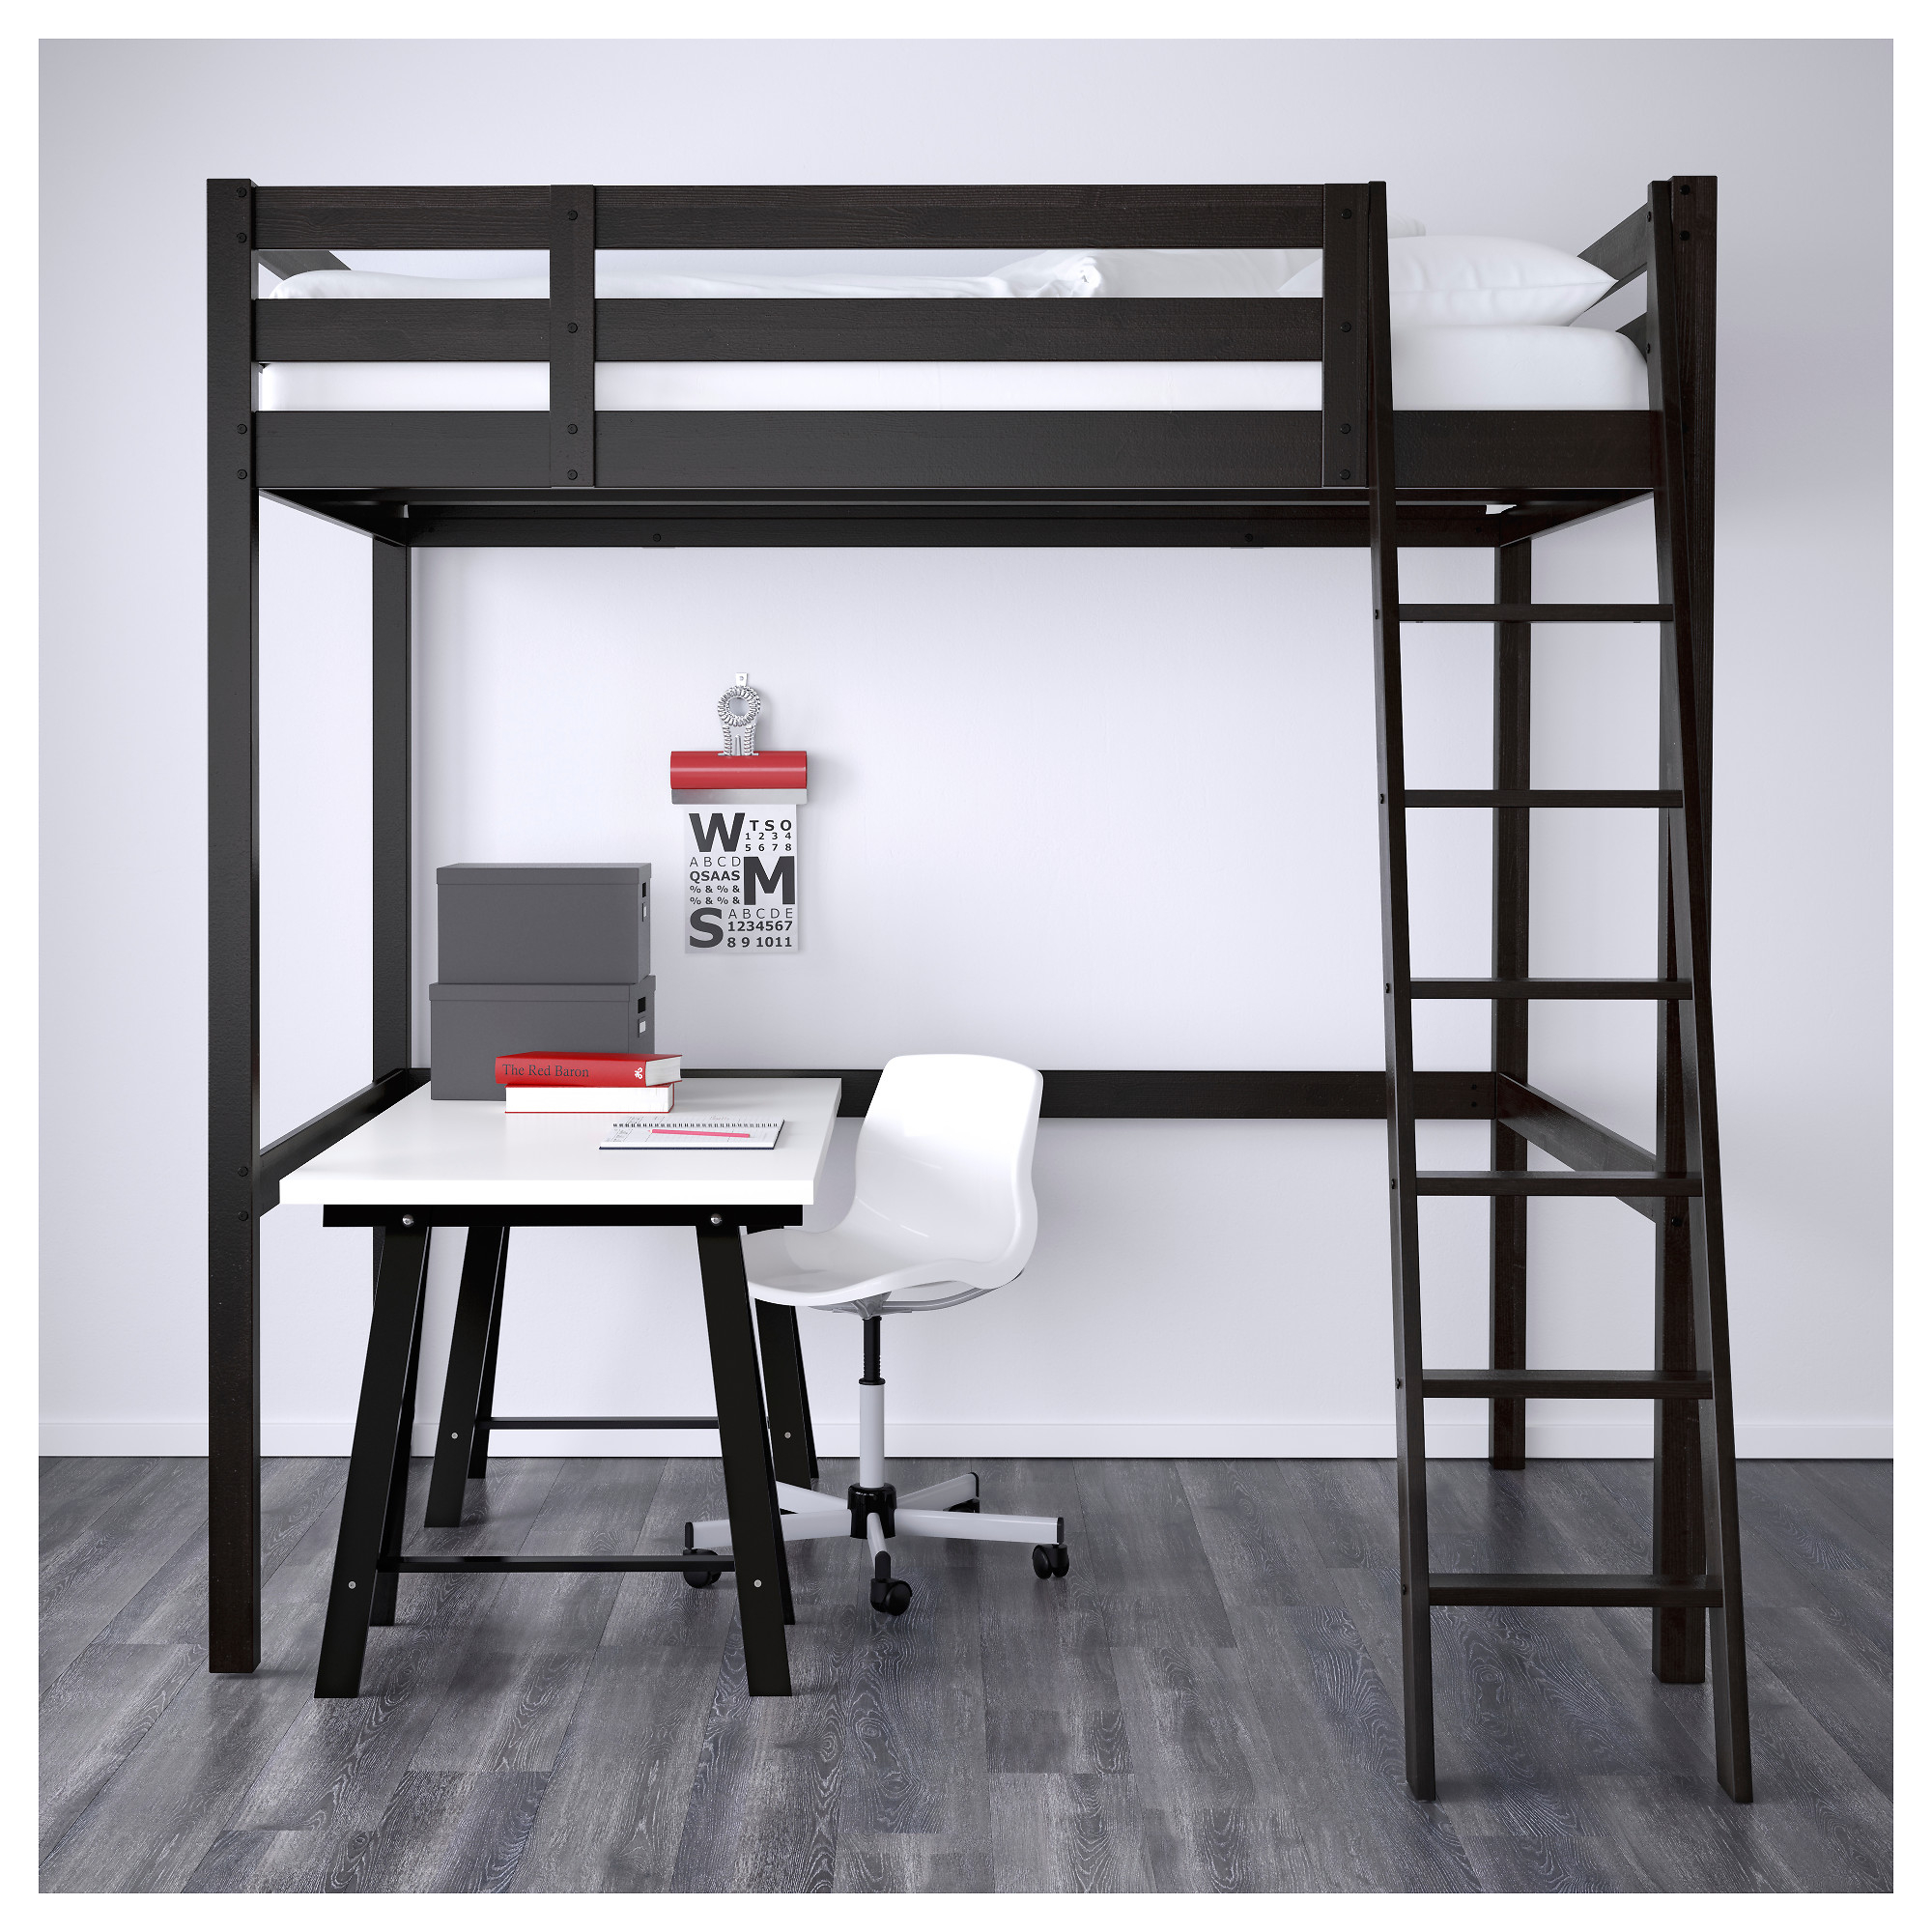 Rijpen Fauteuil partner IKEA Loft Beds - To Buy or Not in IKEA? 5 Reviews - VisualHunt